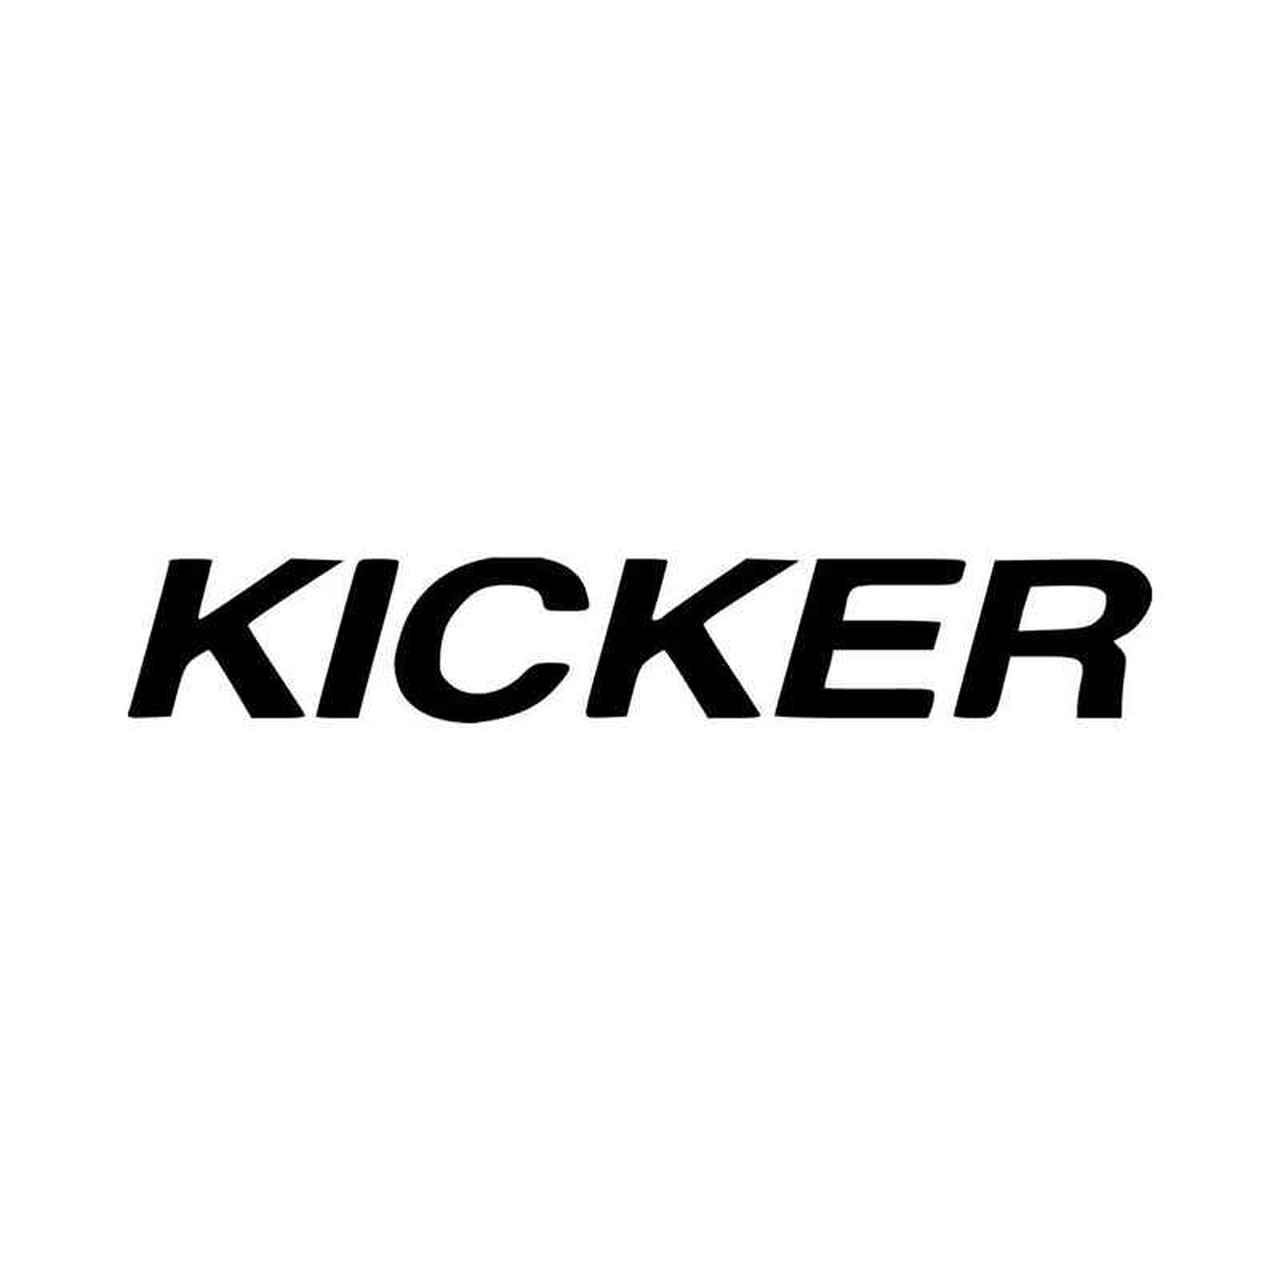 Kicker Logo - Kicker Logo Car Vinyl Decal Sticker